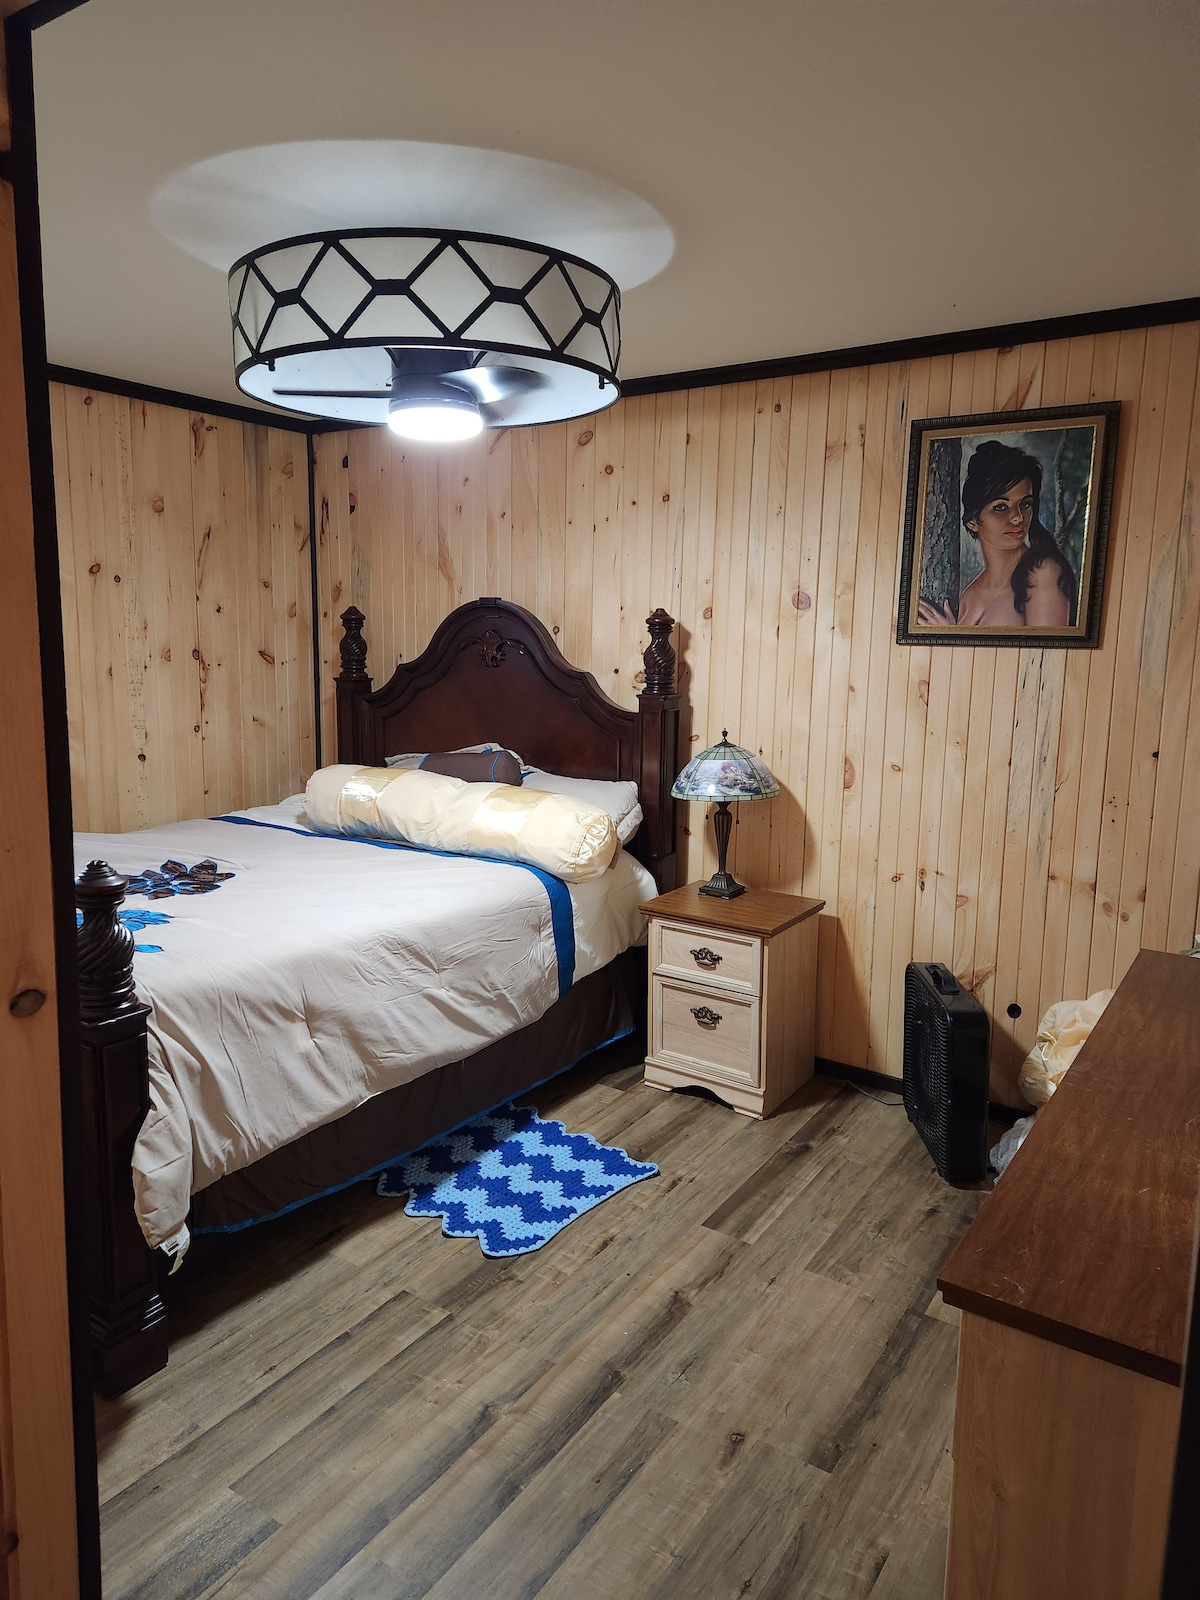 3 bed/2 bath riverside cabin